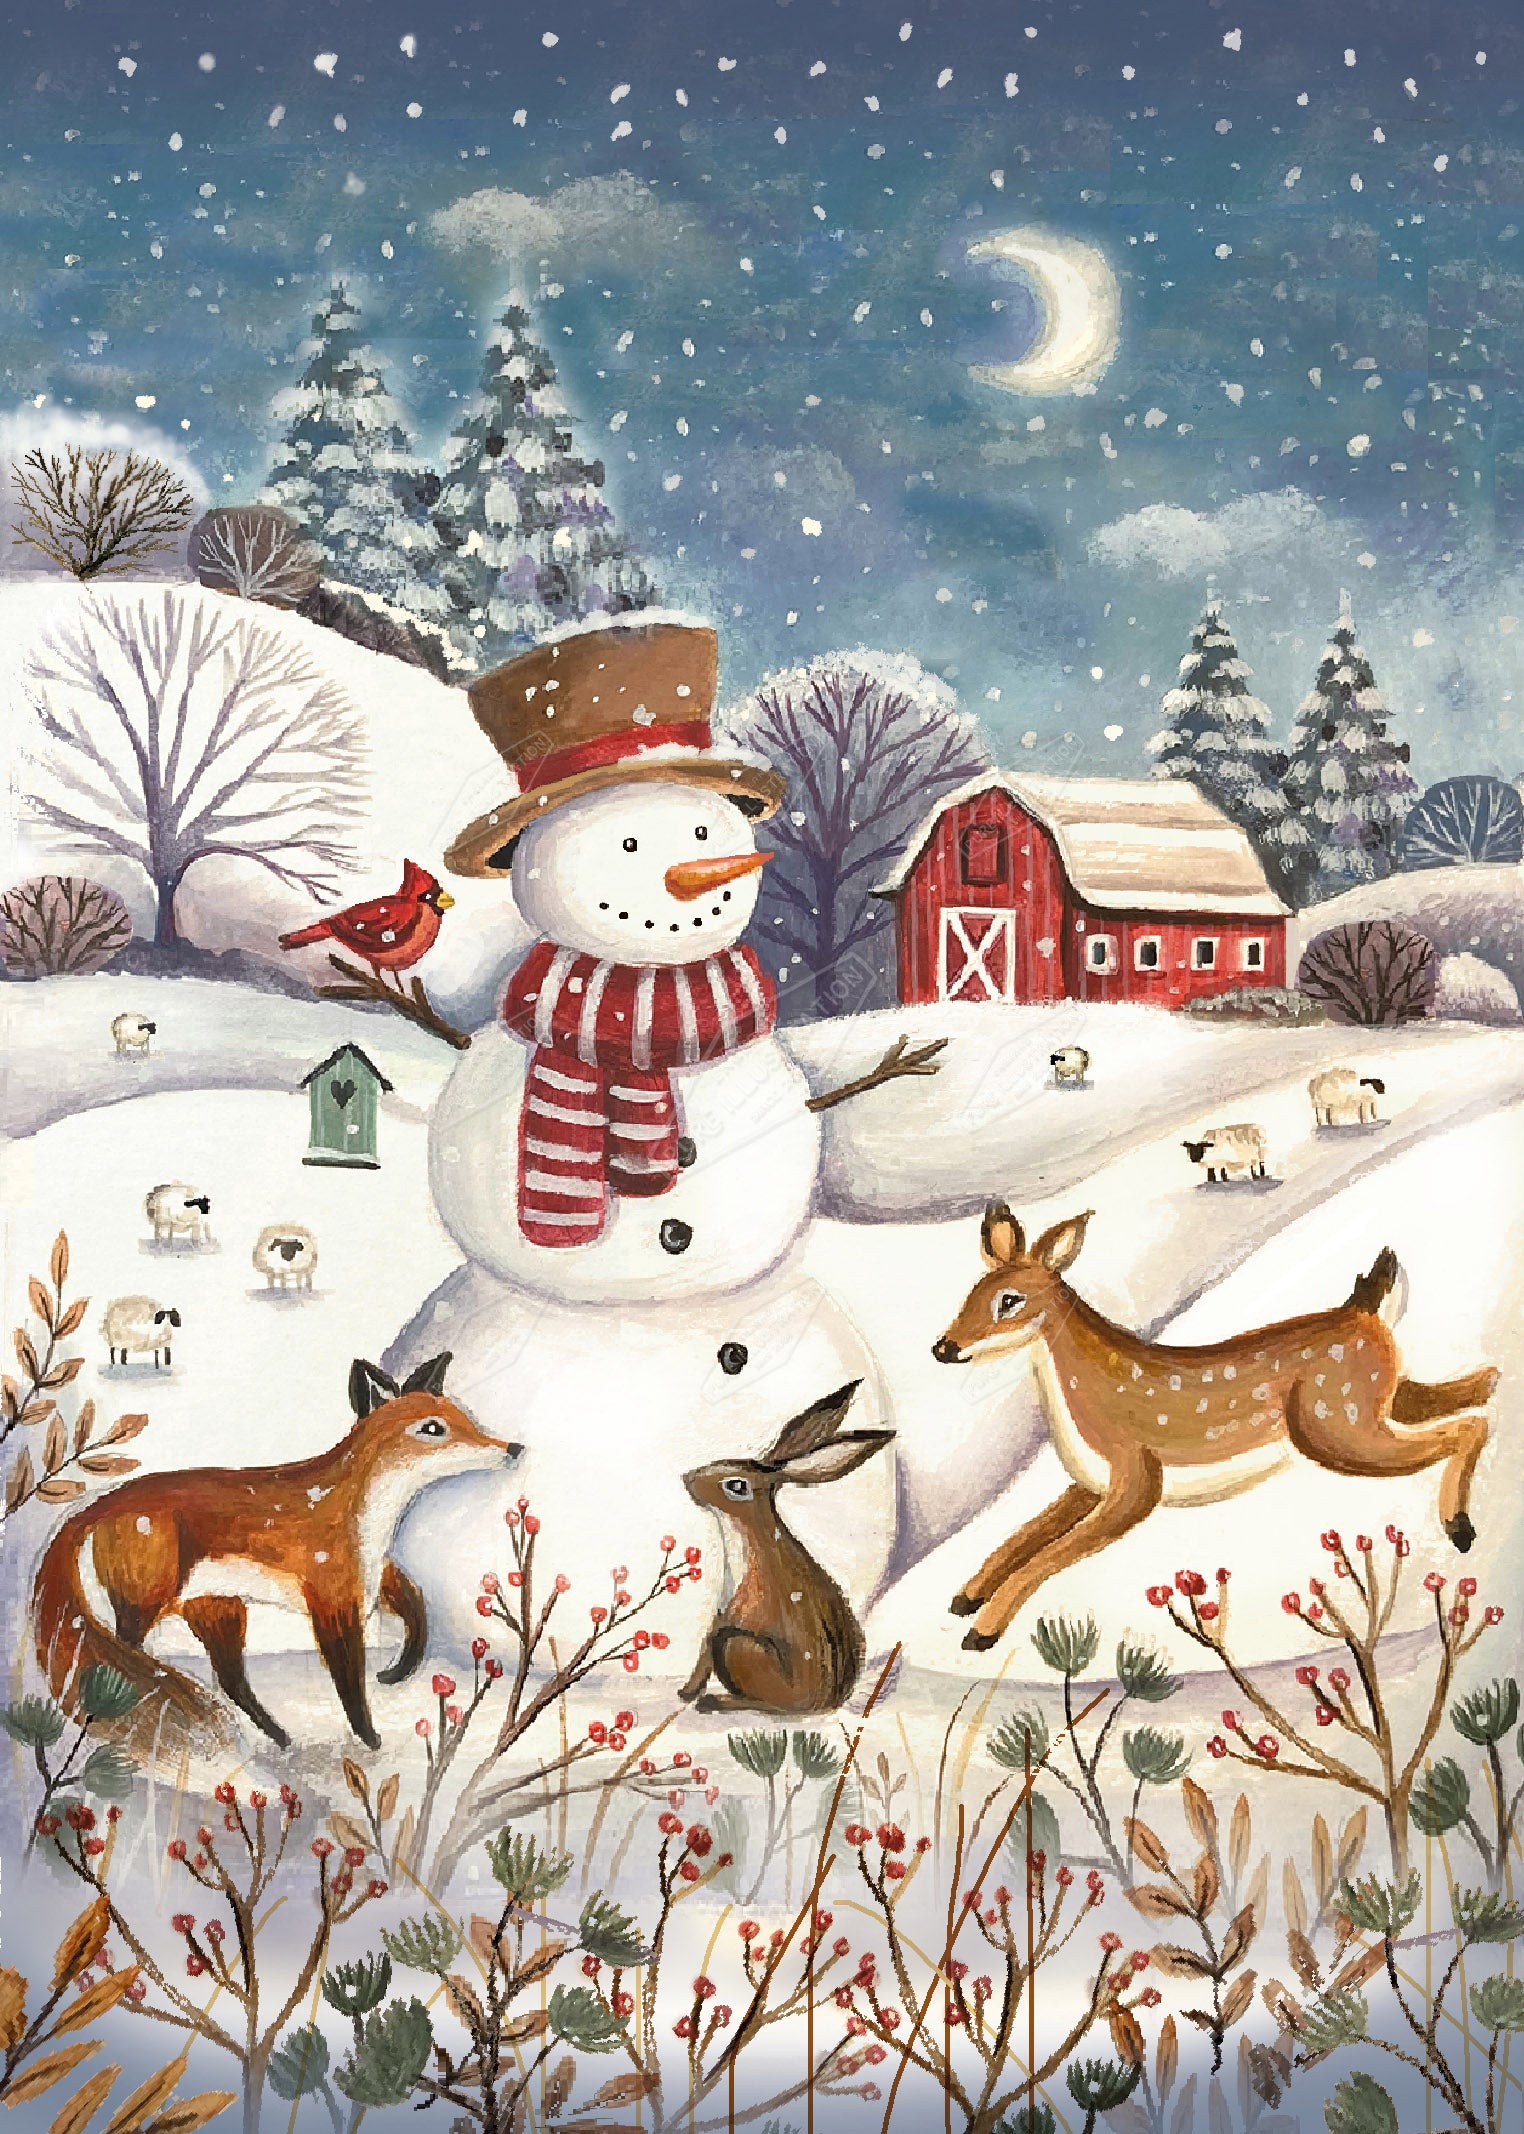 00034956DEVa- Deva Evans is represented by Pure Art Licensing Agency - Christmas Greeting Card Design